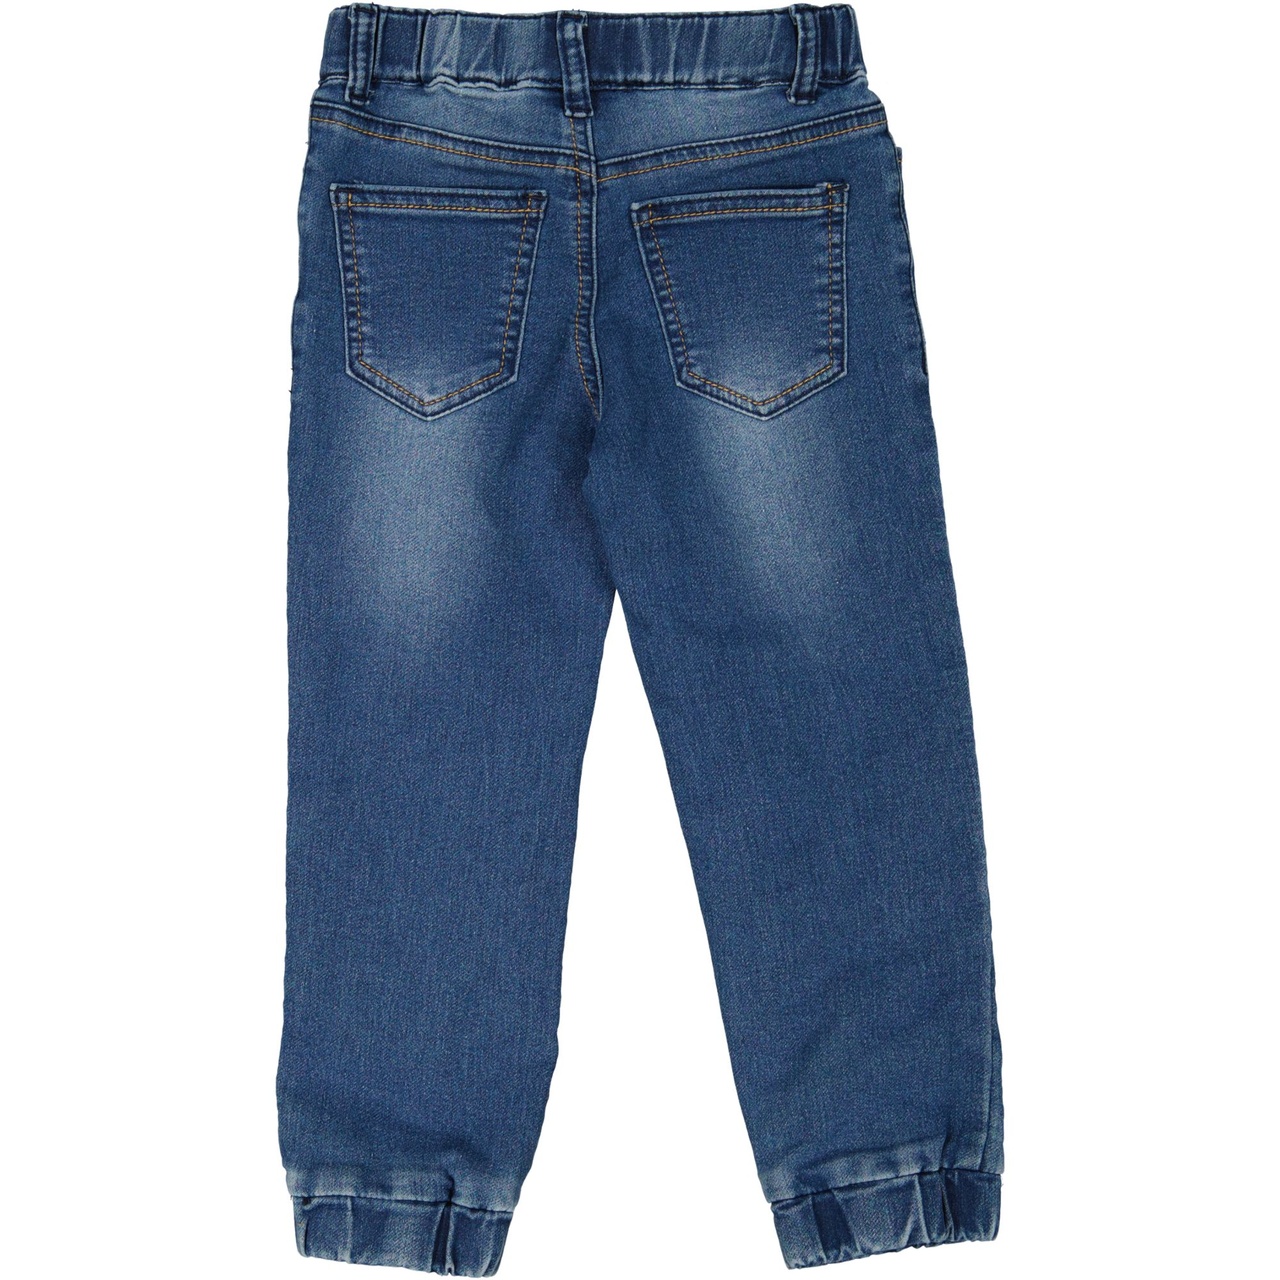 Unisex soft jeans Denim blue wash 98/104